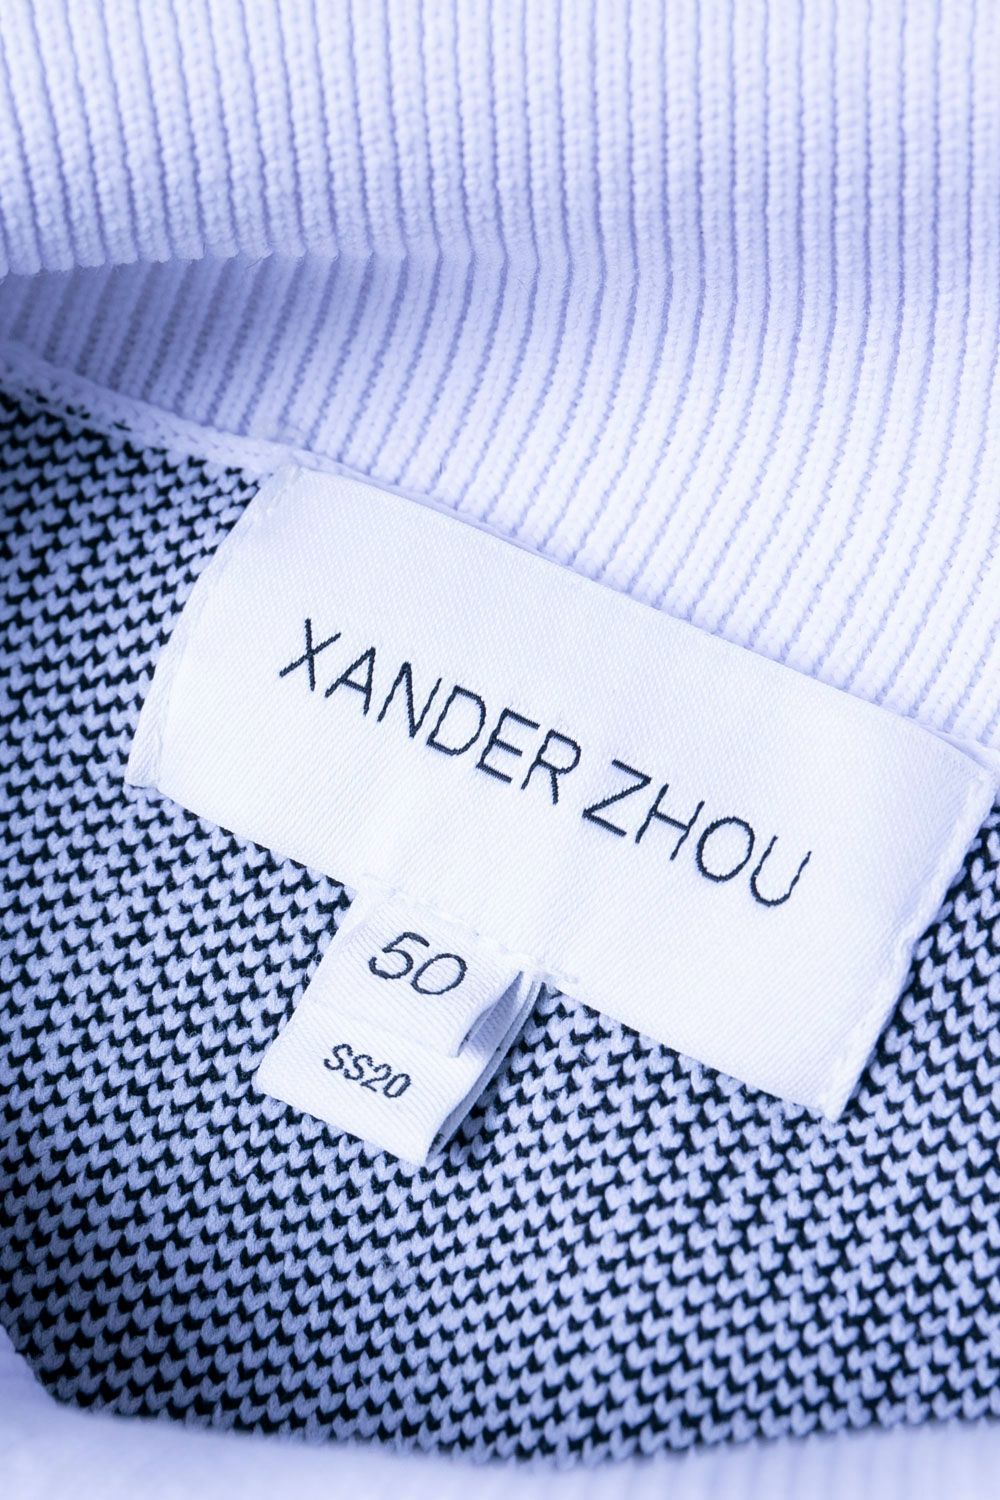 Xander Zhou タートルネックセーター - ニット/セーター